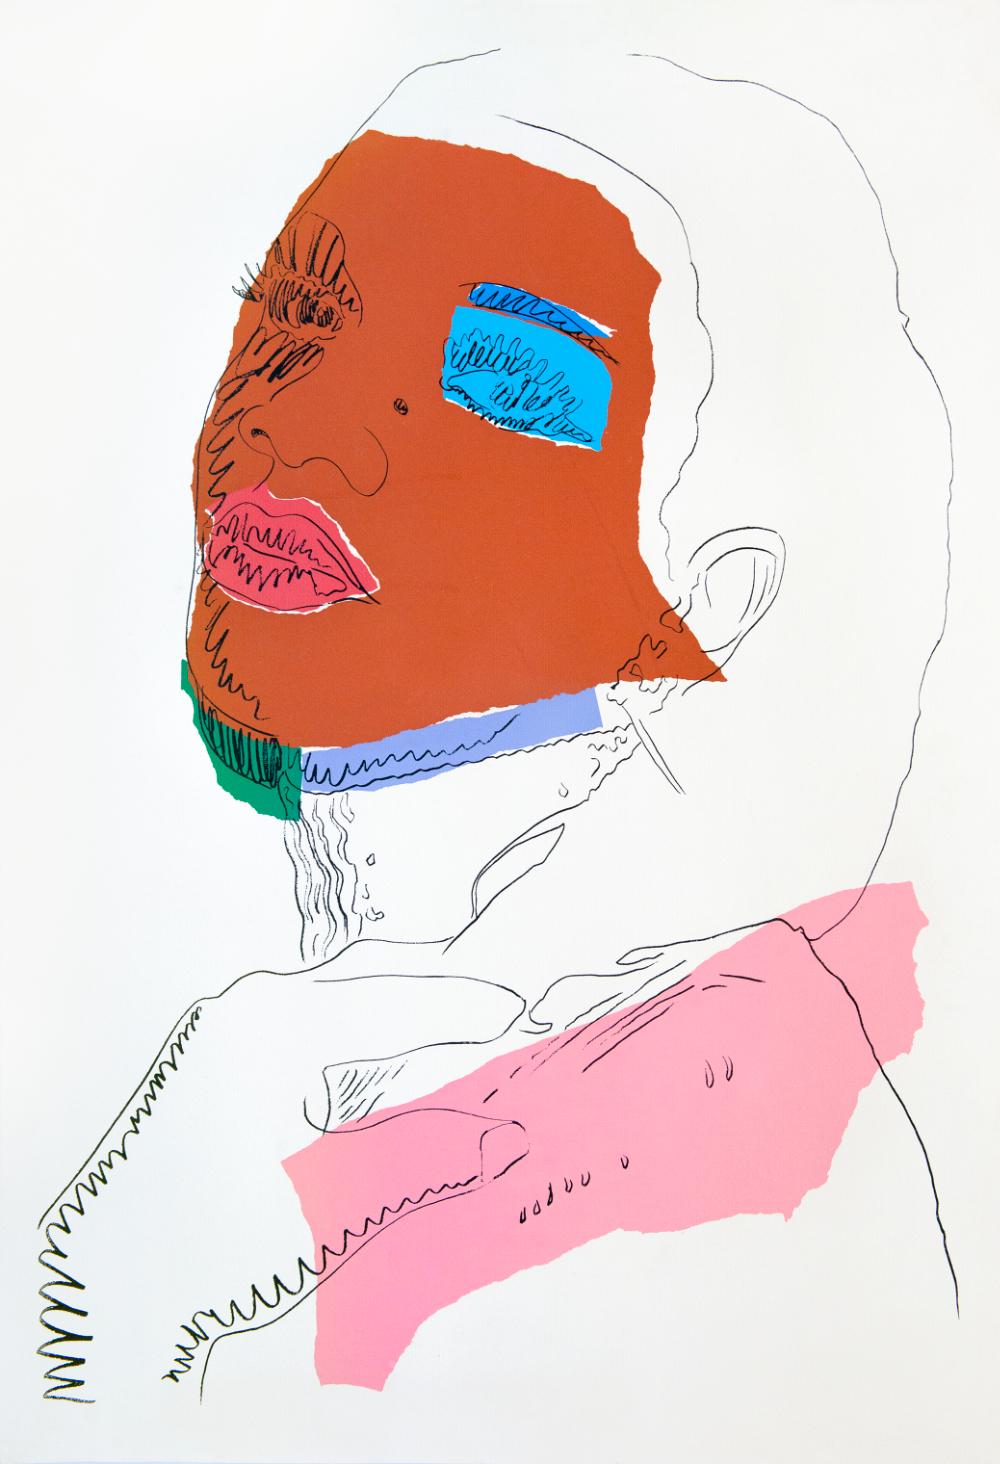 Andy Warhol Portrait Print - Ladies and Gentlemen